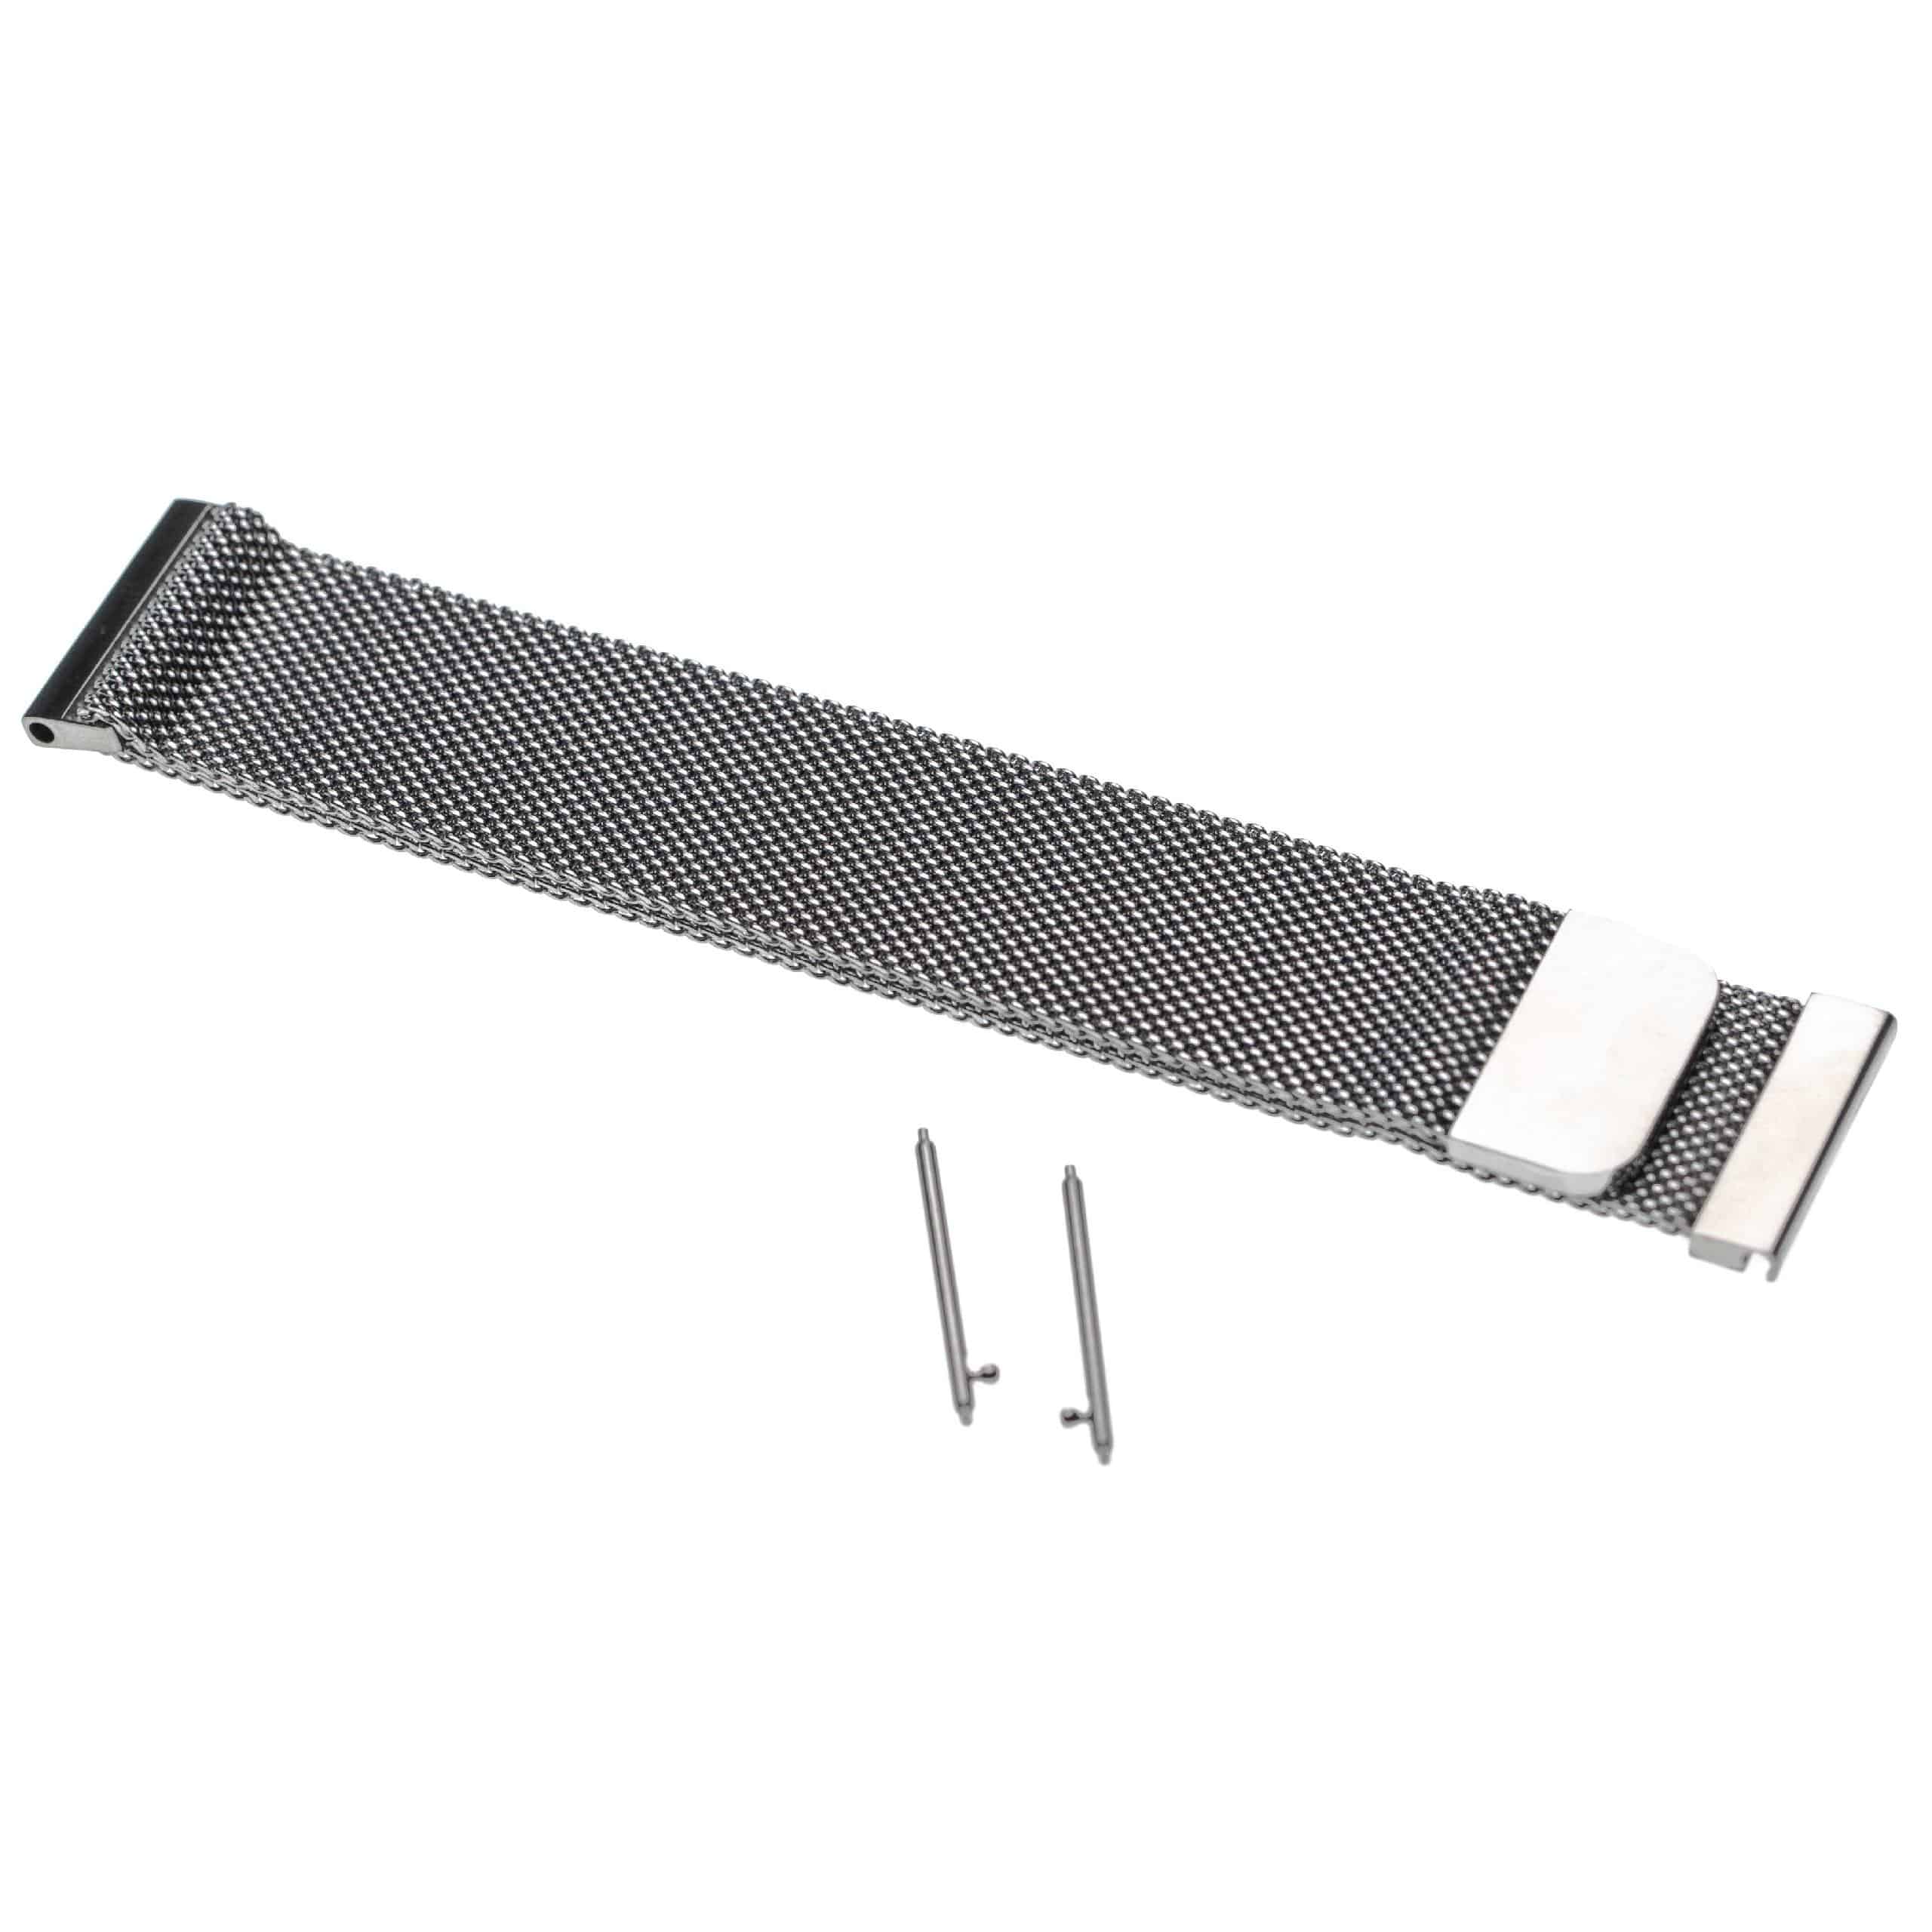 cinturino per Samsung Gear / Galaxy Smartwatch - fino a 191 mm circonferenza del polso, acciaio inox, argento